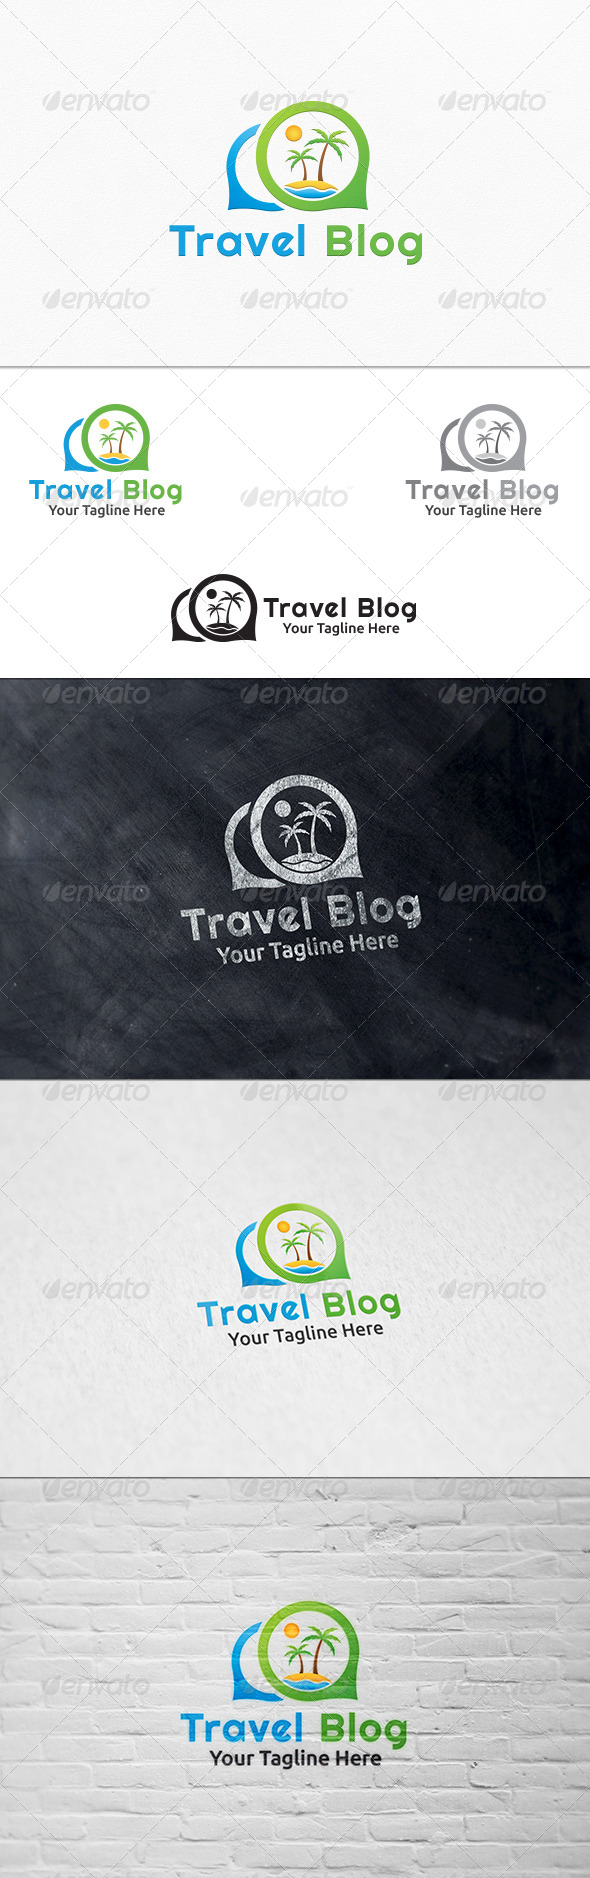 Travel Blog - Logo Template